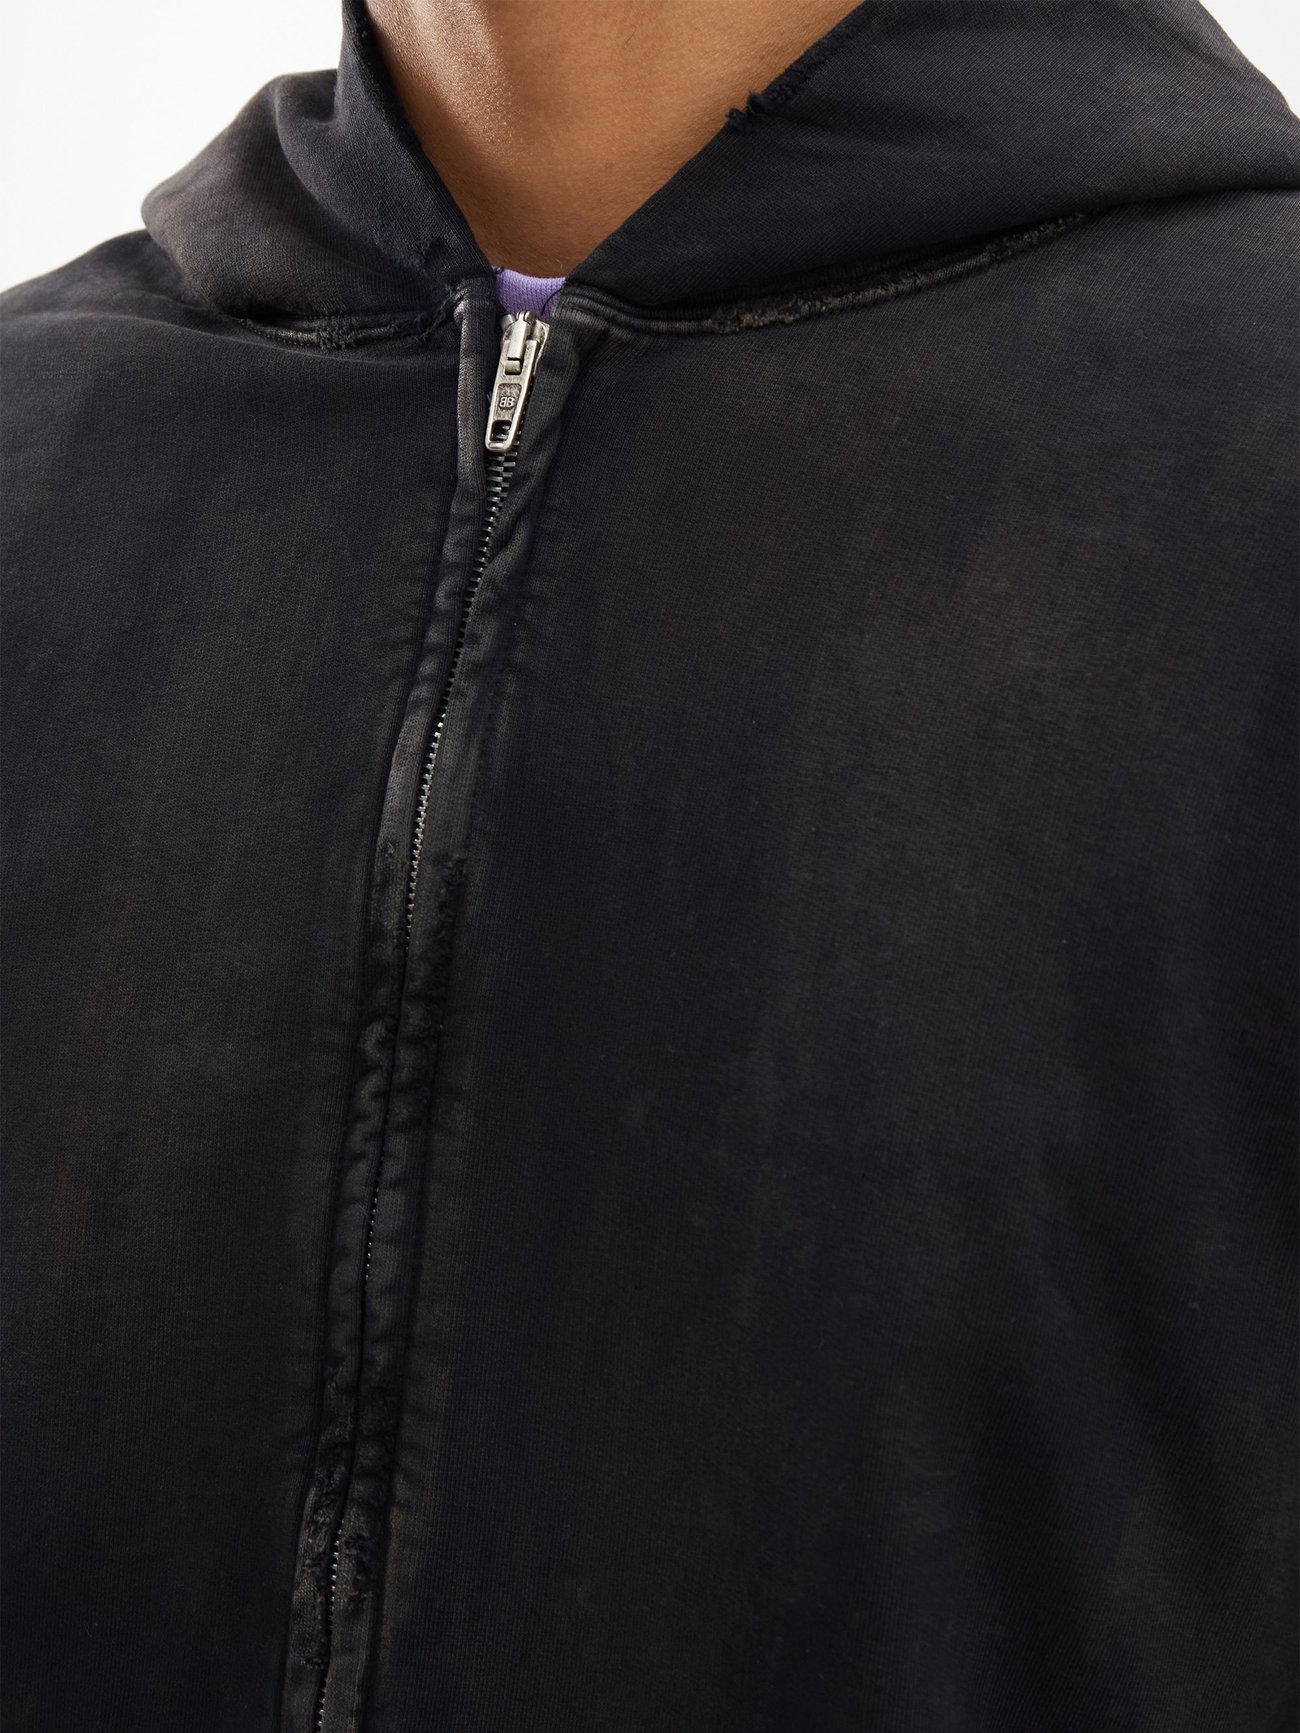 Balenciaga Distressed Zip Hoodie in Washed Black